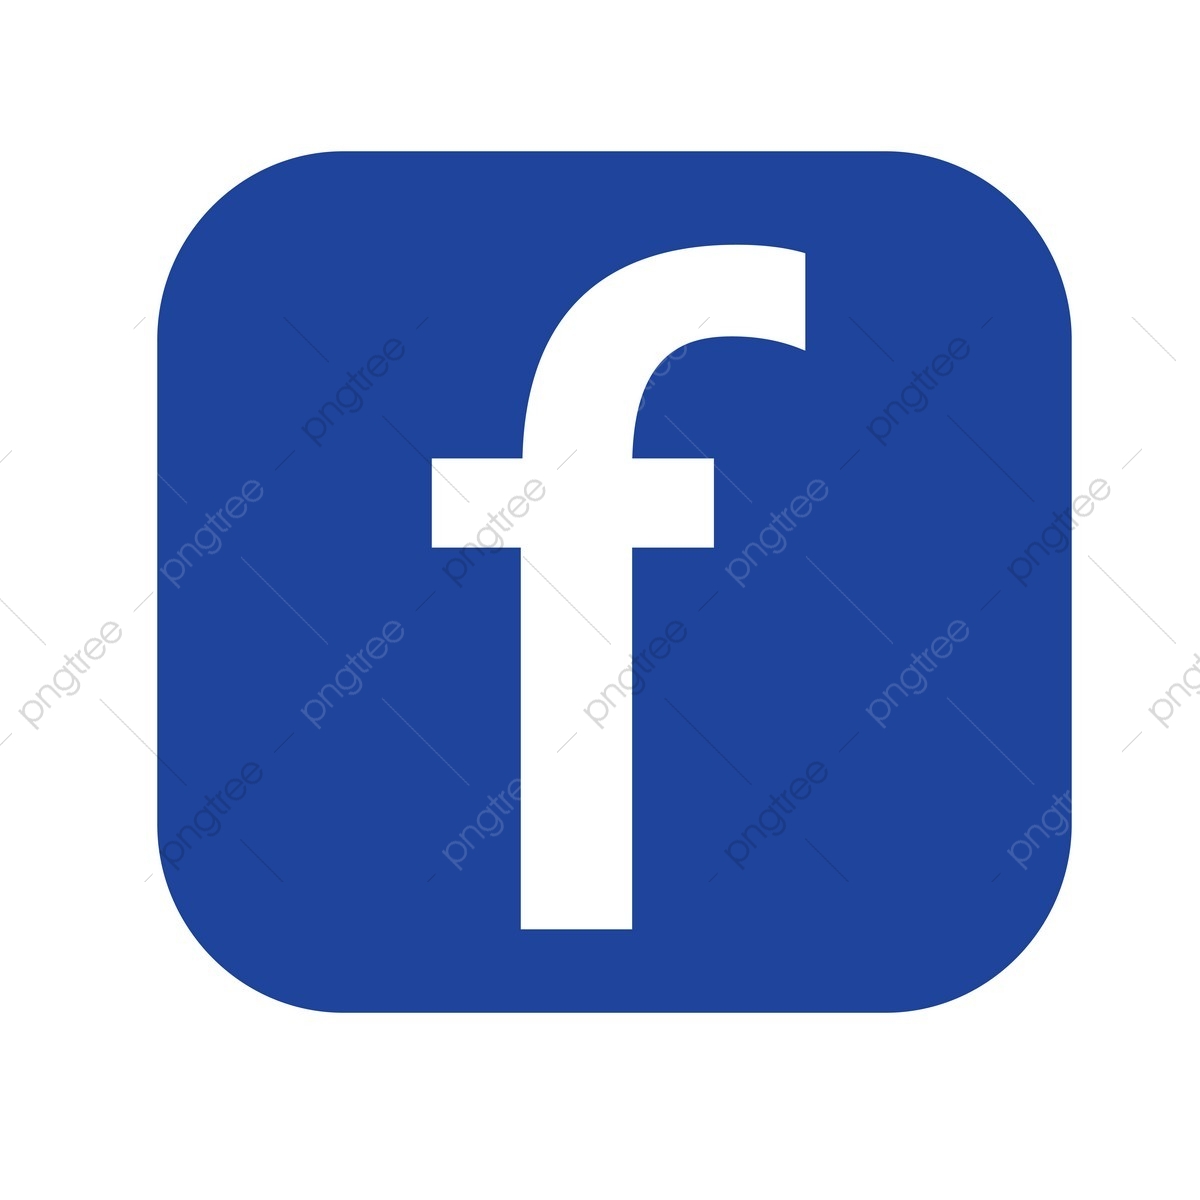 Facebook clipart illustrator. Logo icon social media